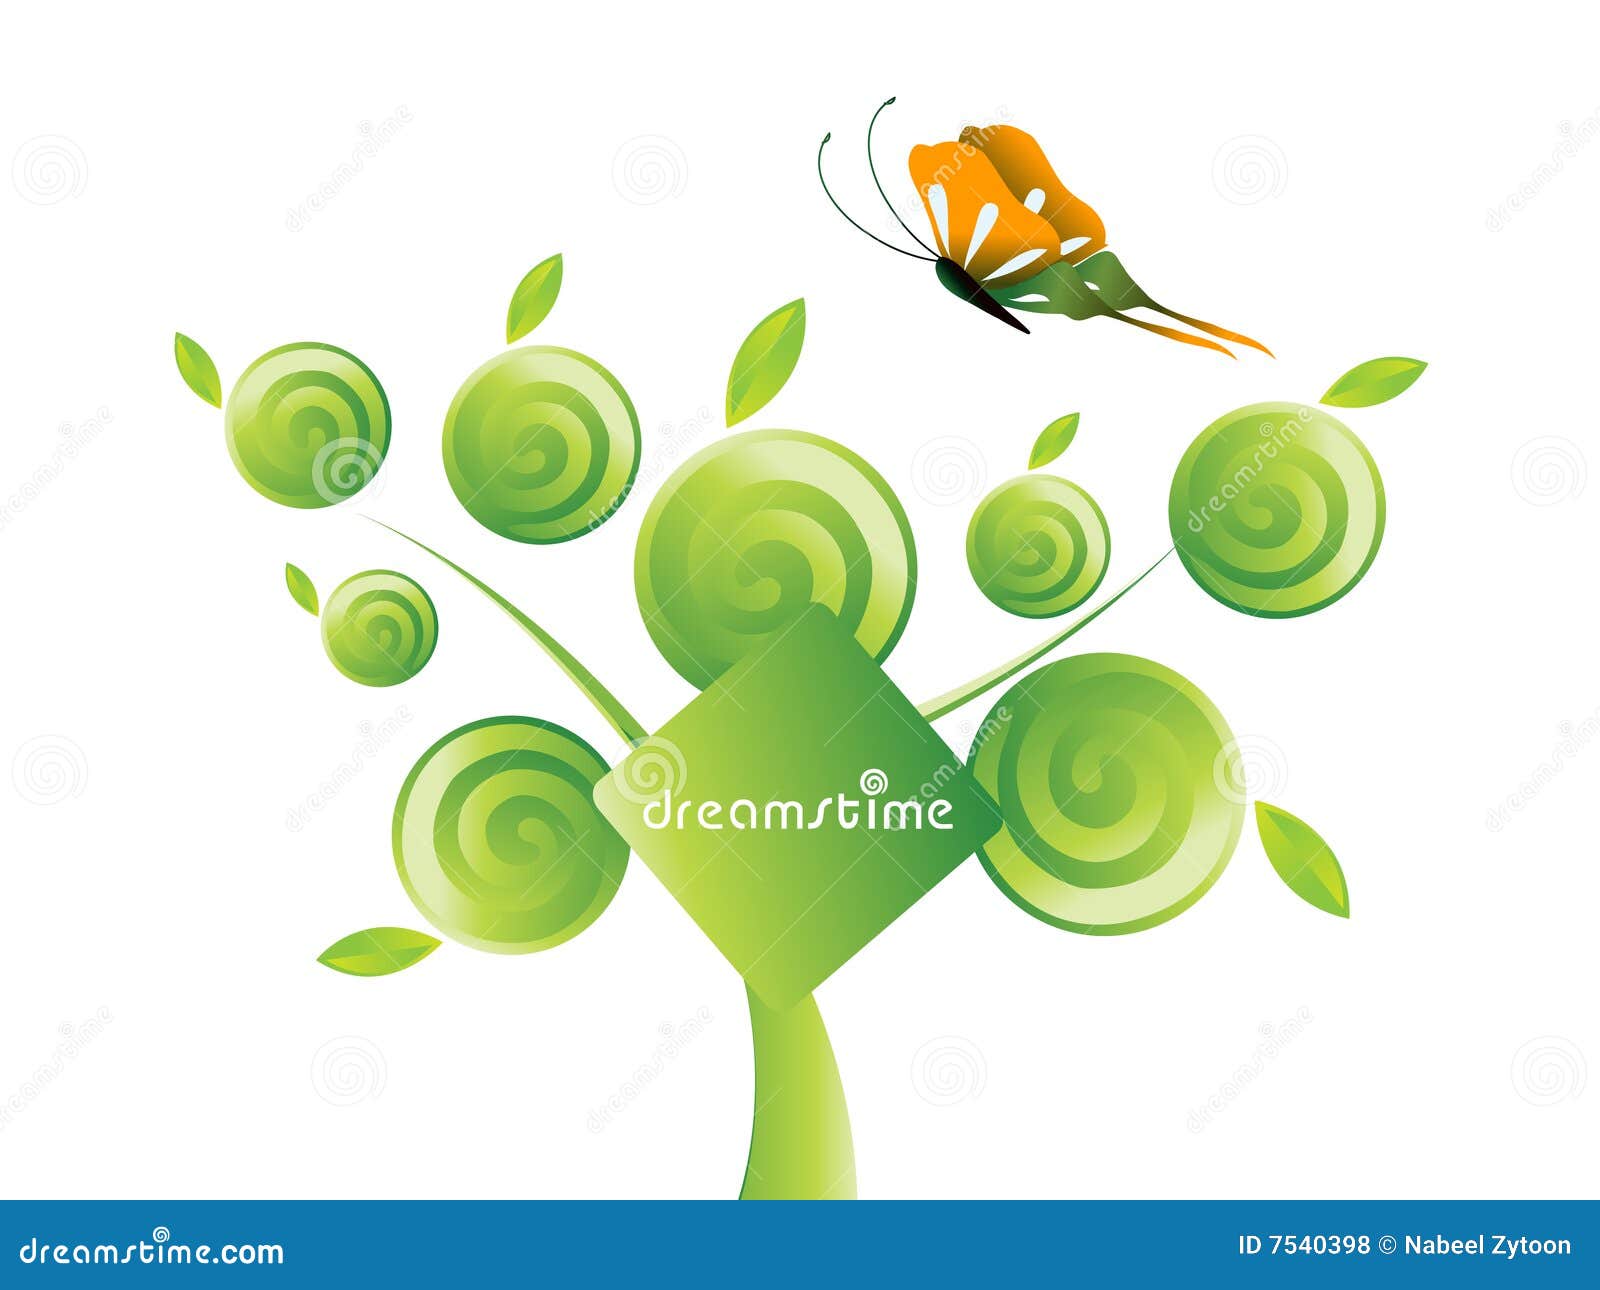 Dreamstime Tree stock vector. Illustration of branding 7540398